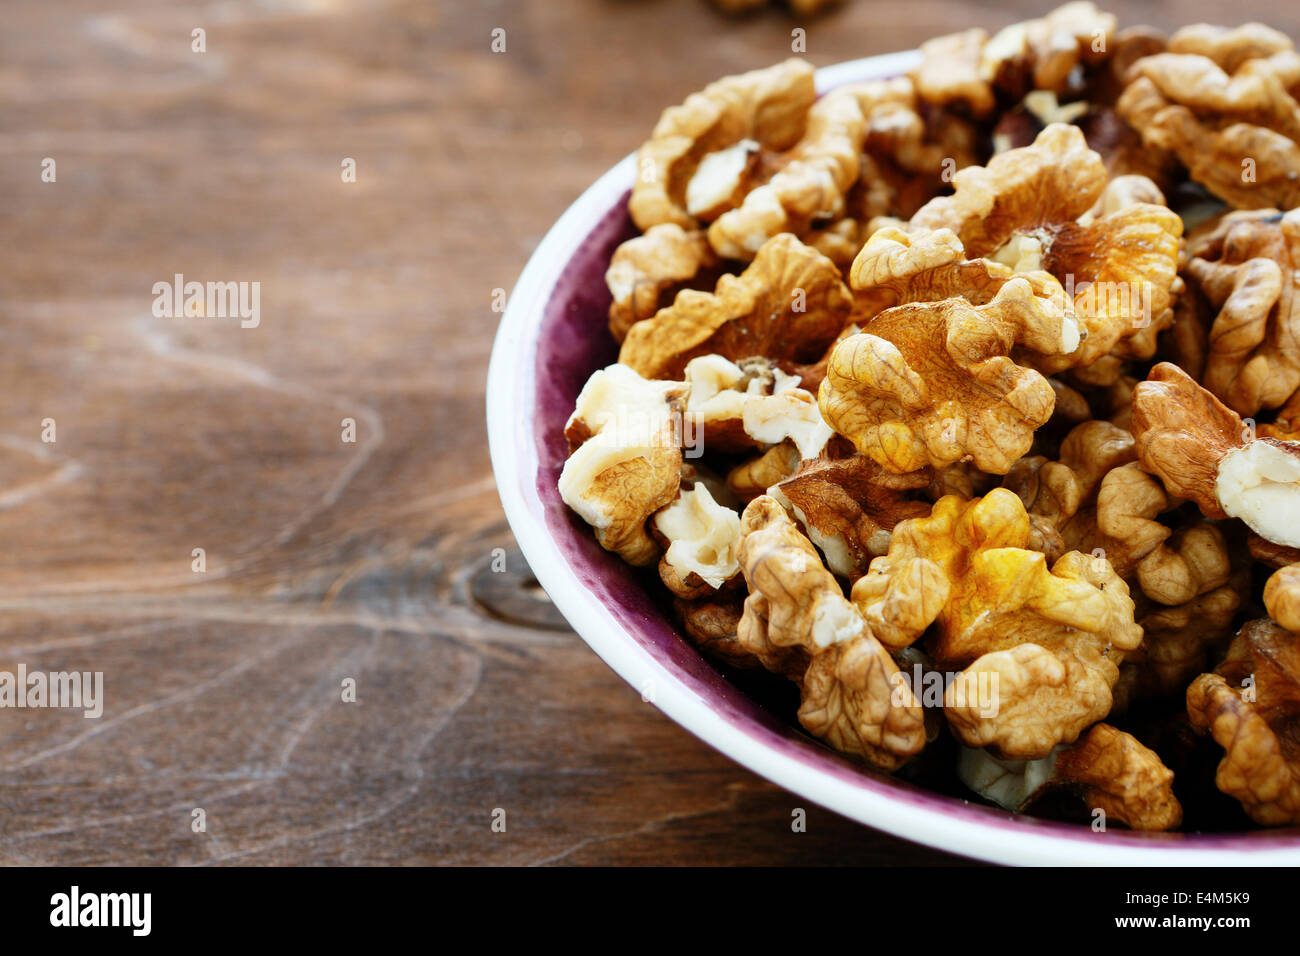 walnuts in a bowlб ащщв сдщыугз Stock Photo